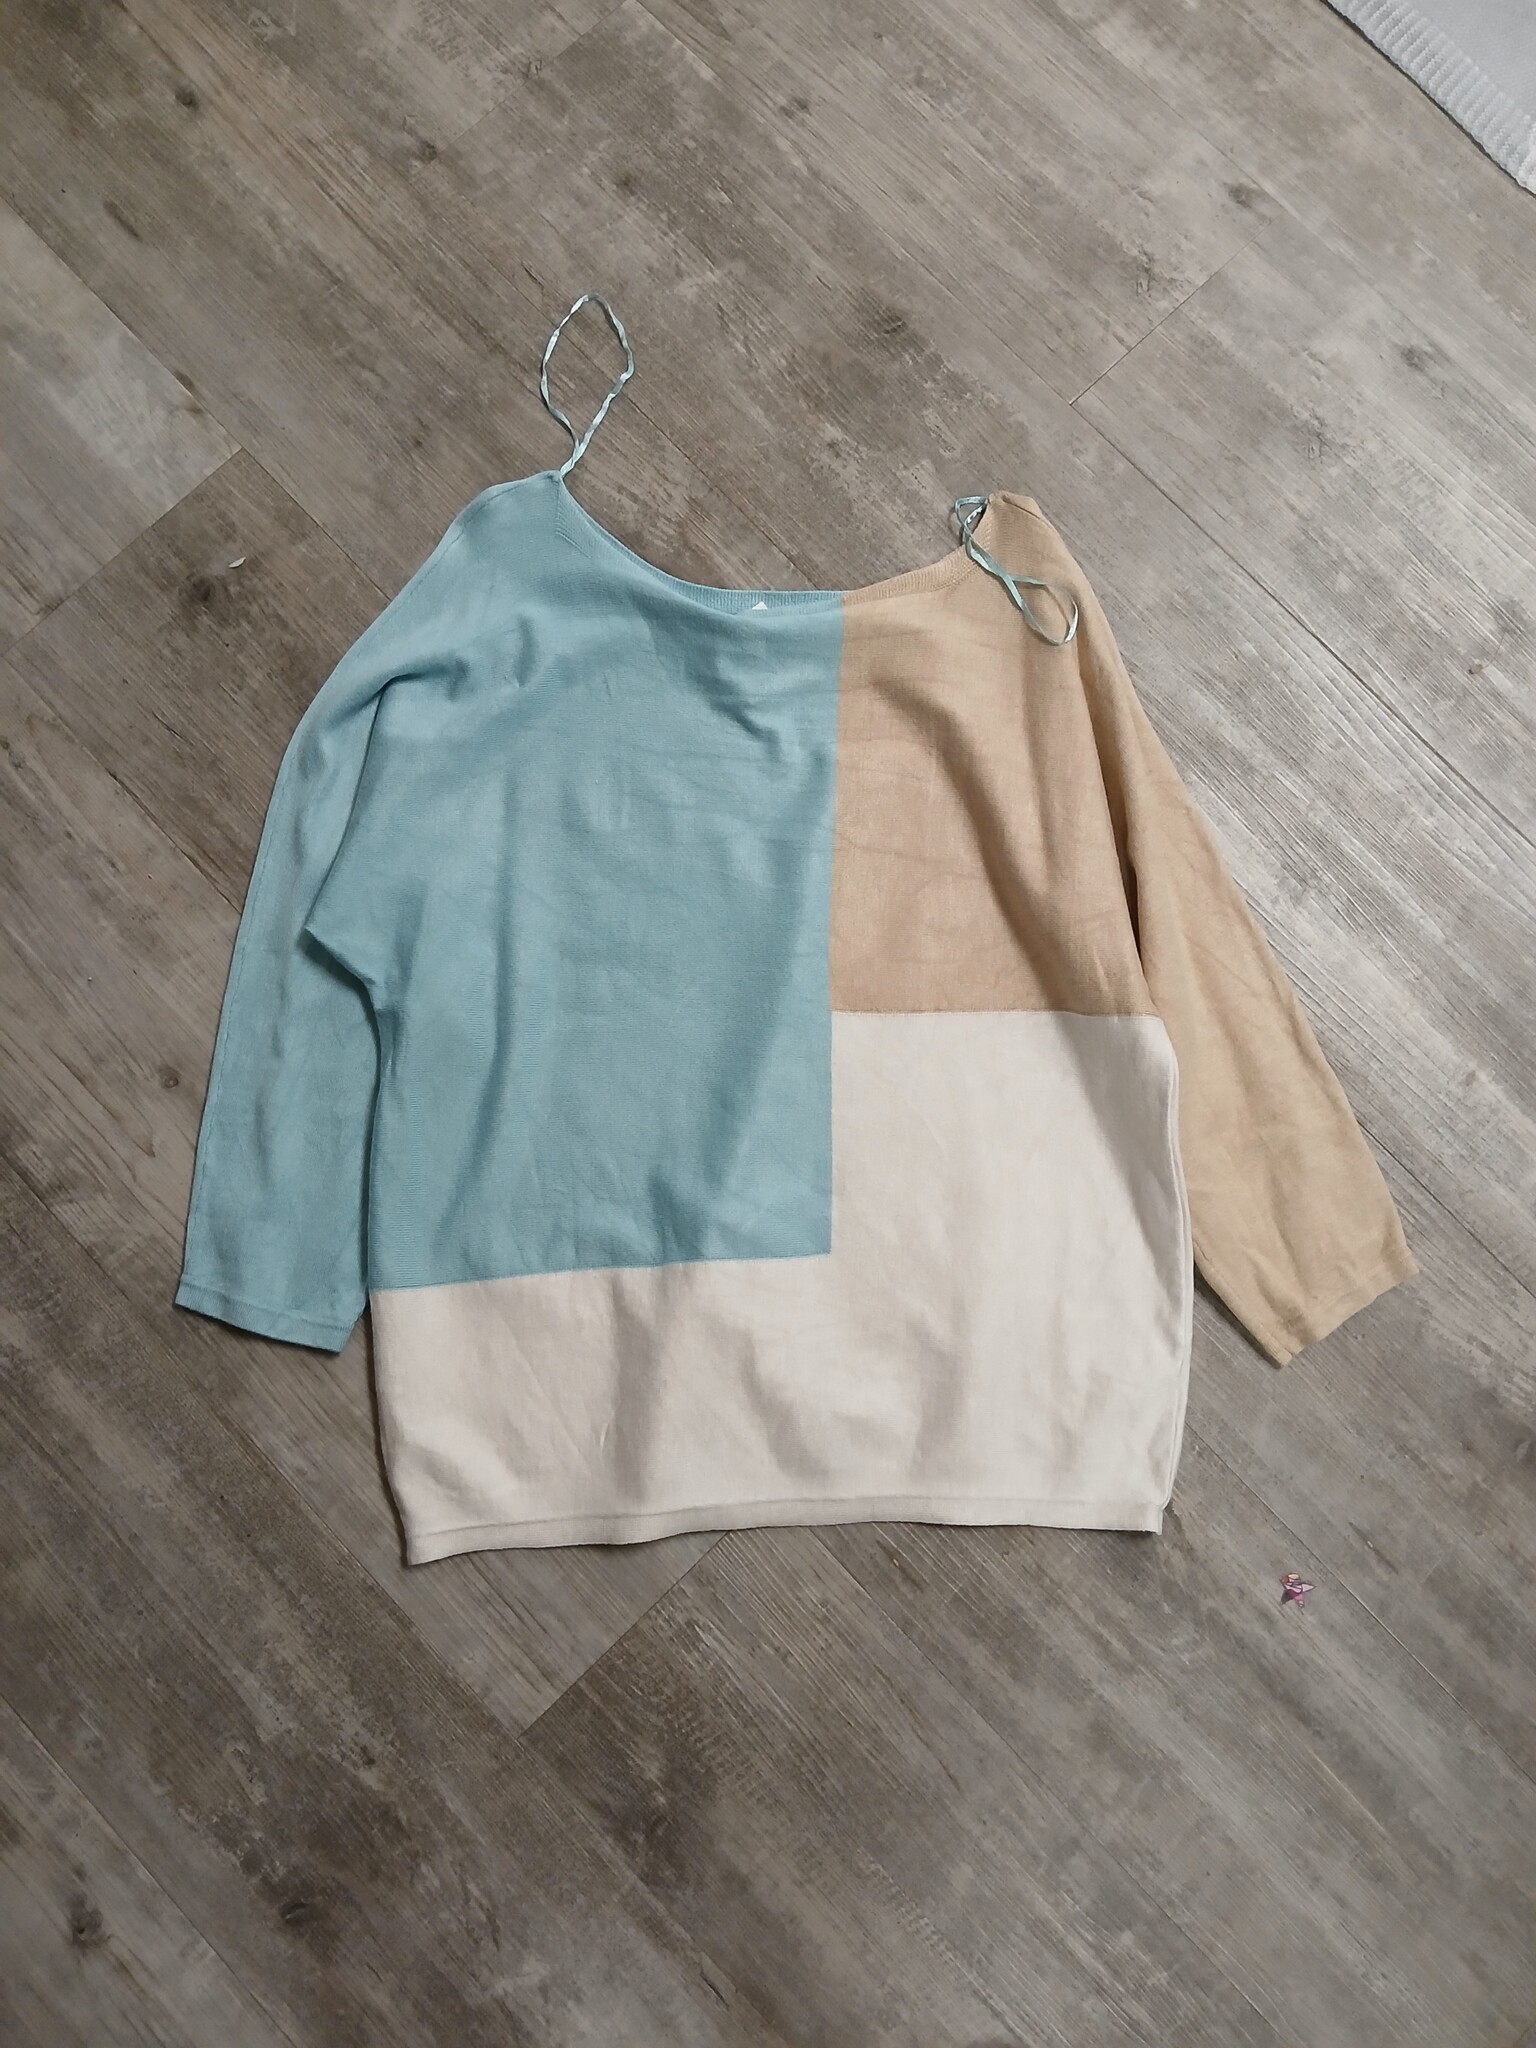 Color Block Sweater Size M